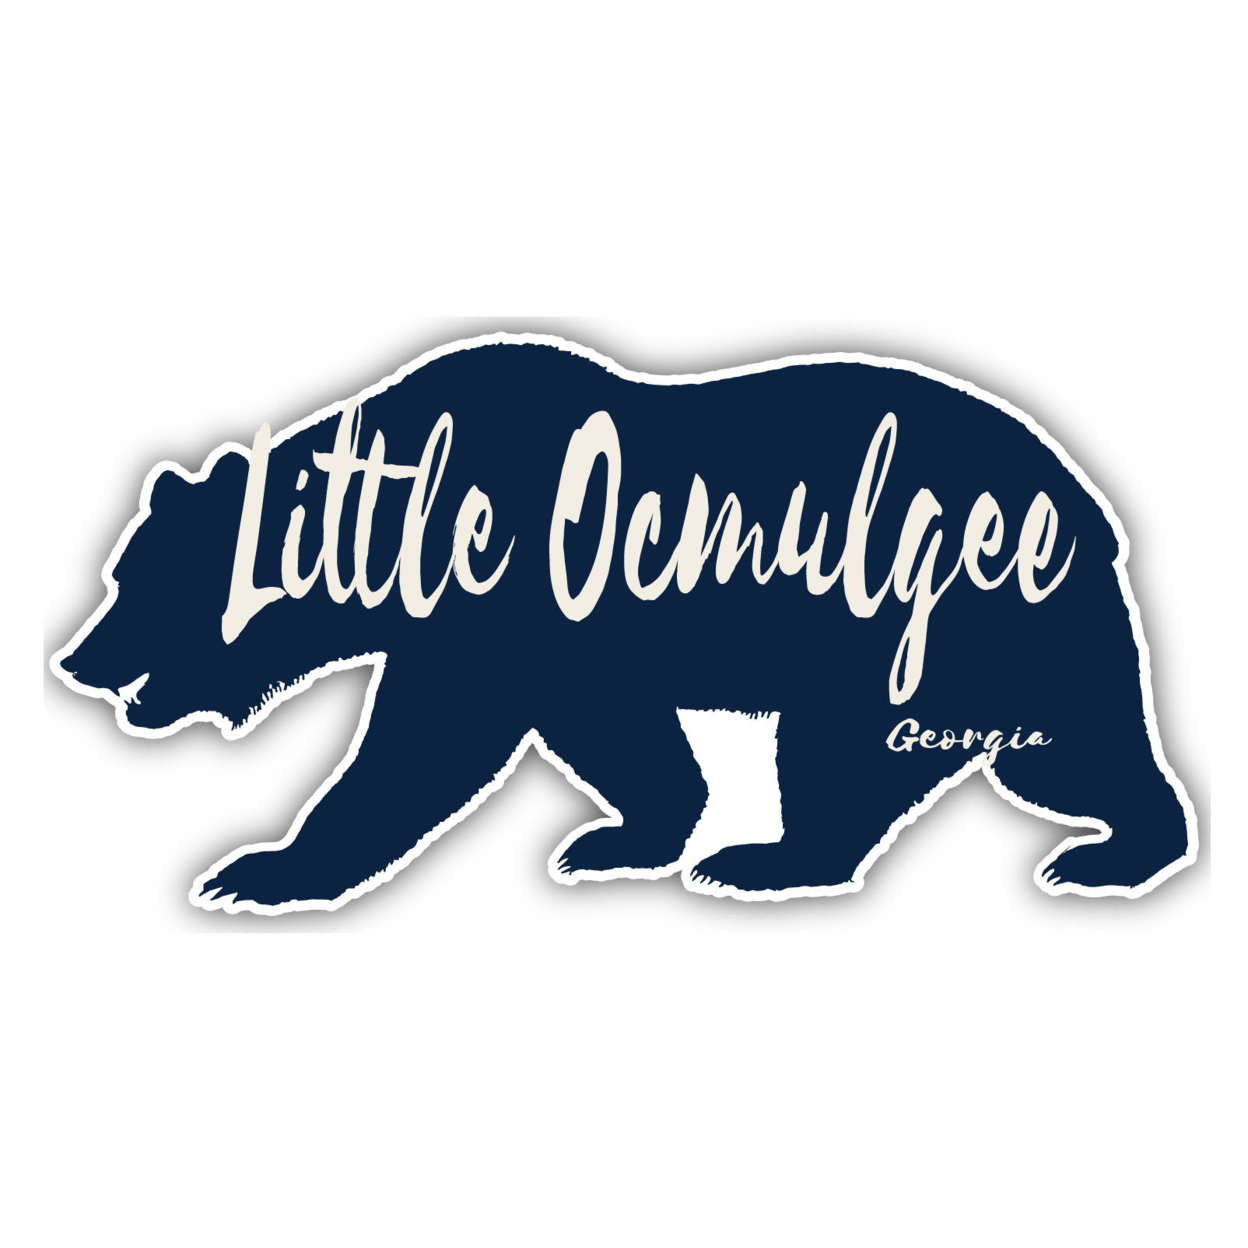 Little Ocmulgee Georgia Souvenir Decorative Stickers (Choose Theme And Size) - 2-Inch, Bear